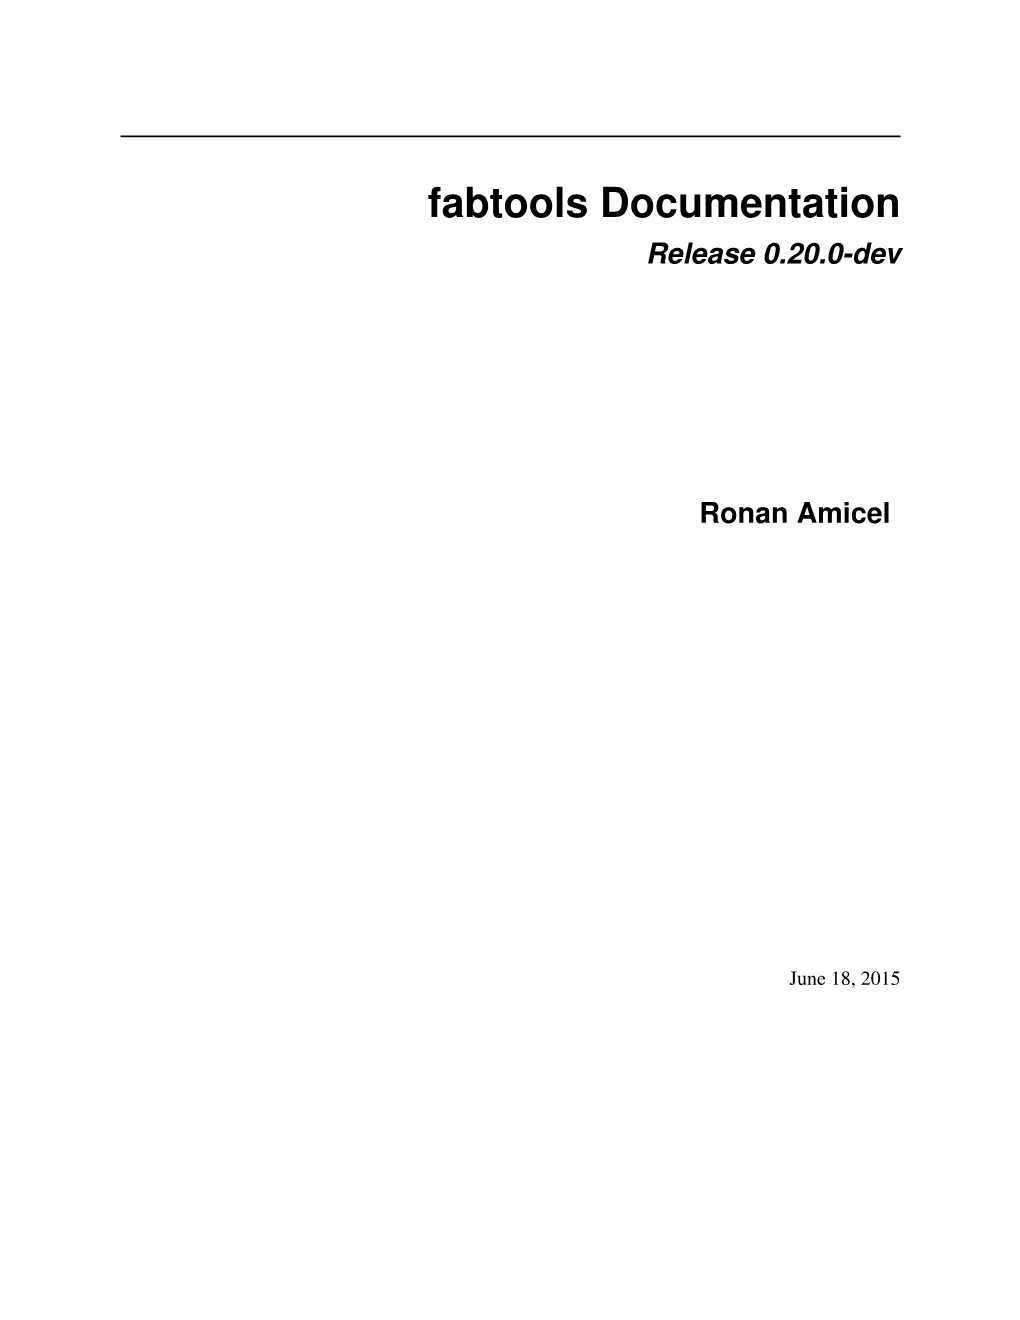 Fabtools Documentation Release 0.20.0-Dev